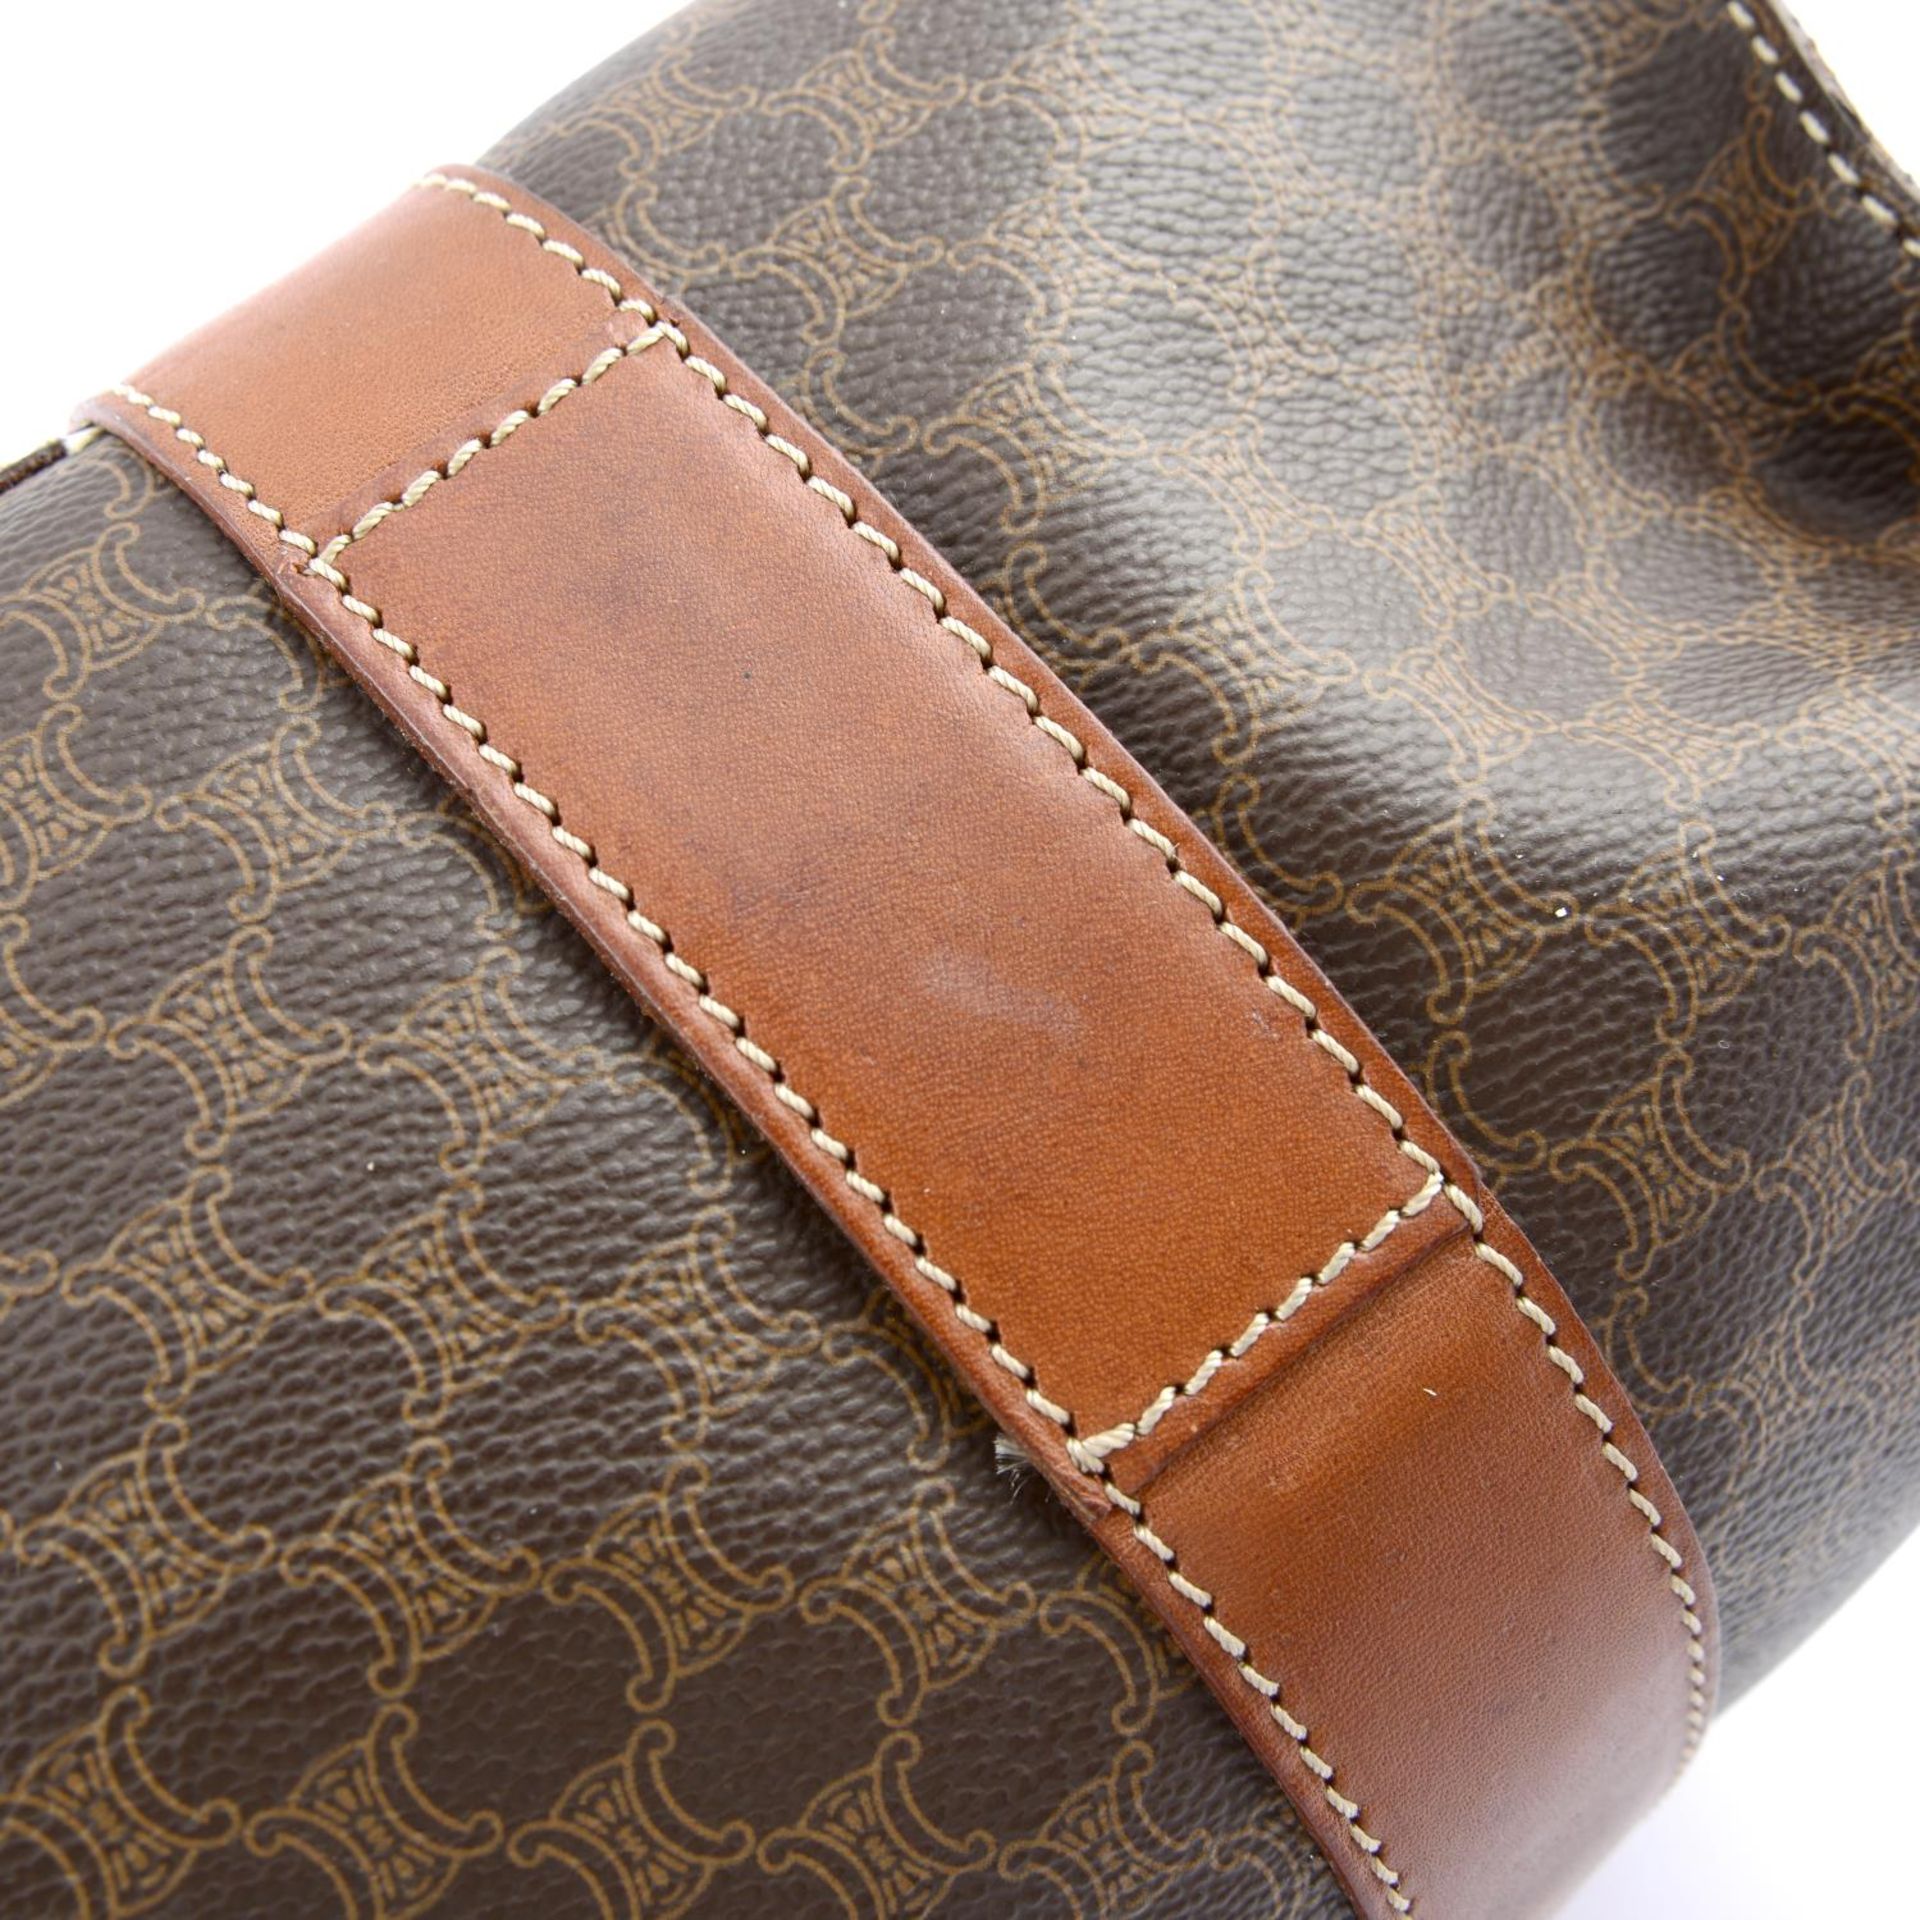 CÉLINE - a Macadam coated canvas handbag. - Image 6 of 7